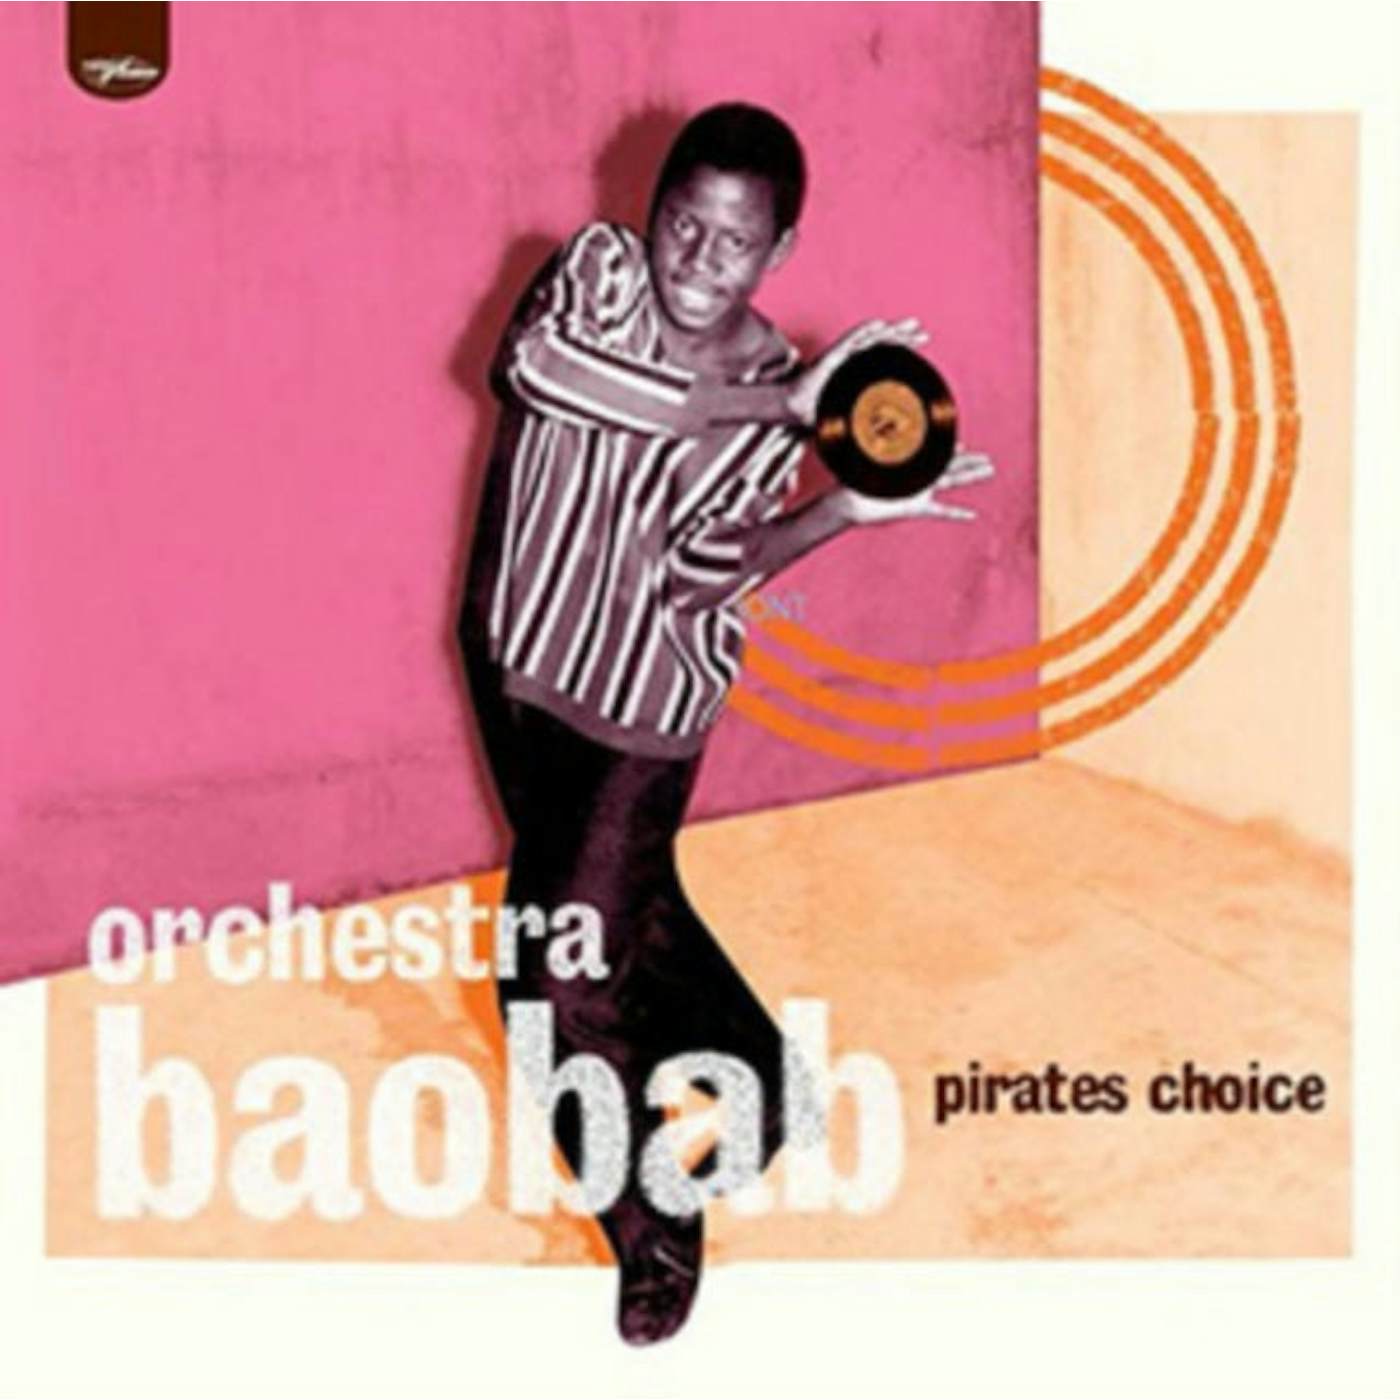 Orchestra Baobab LP Vinyl Record - Pirates Choice